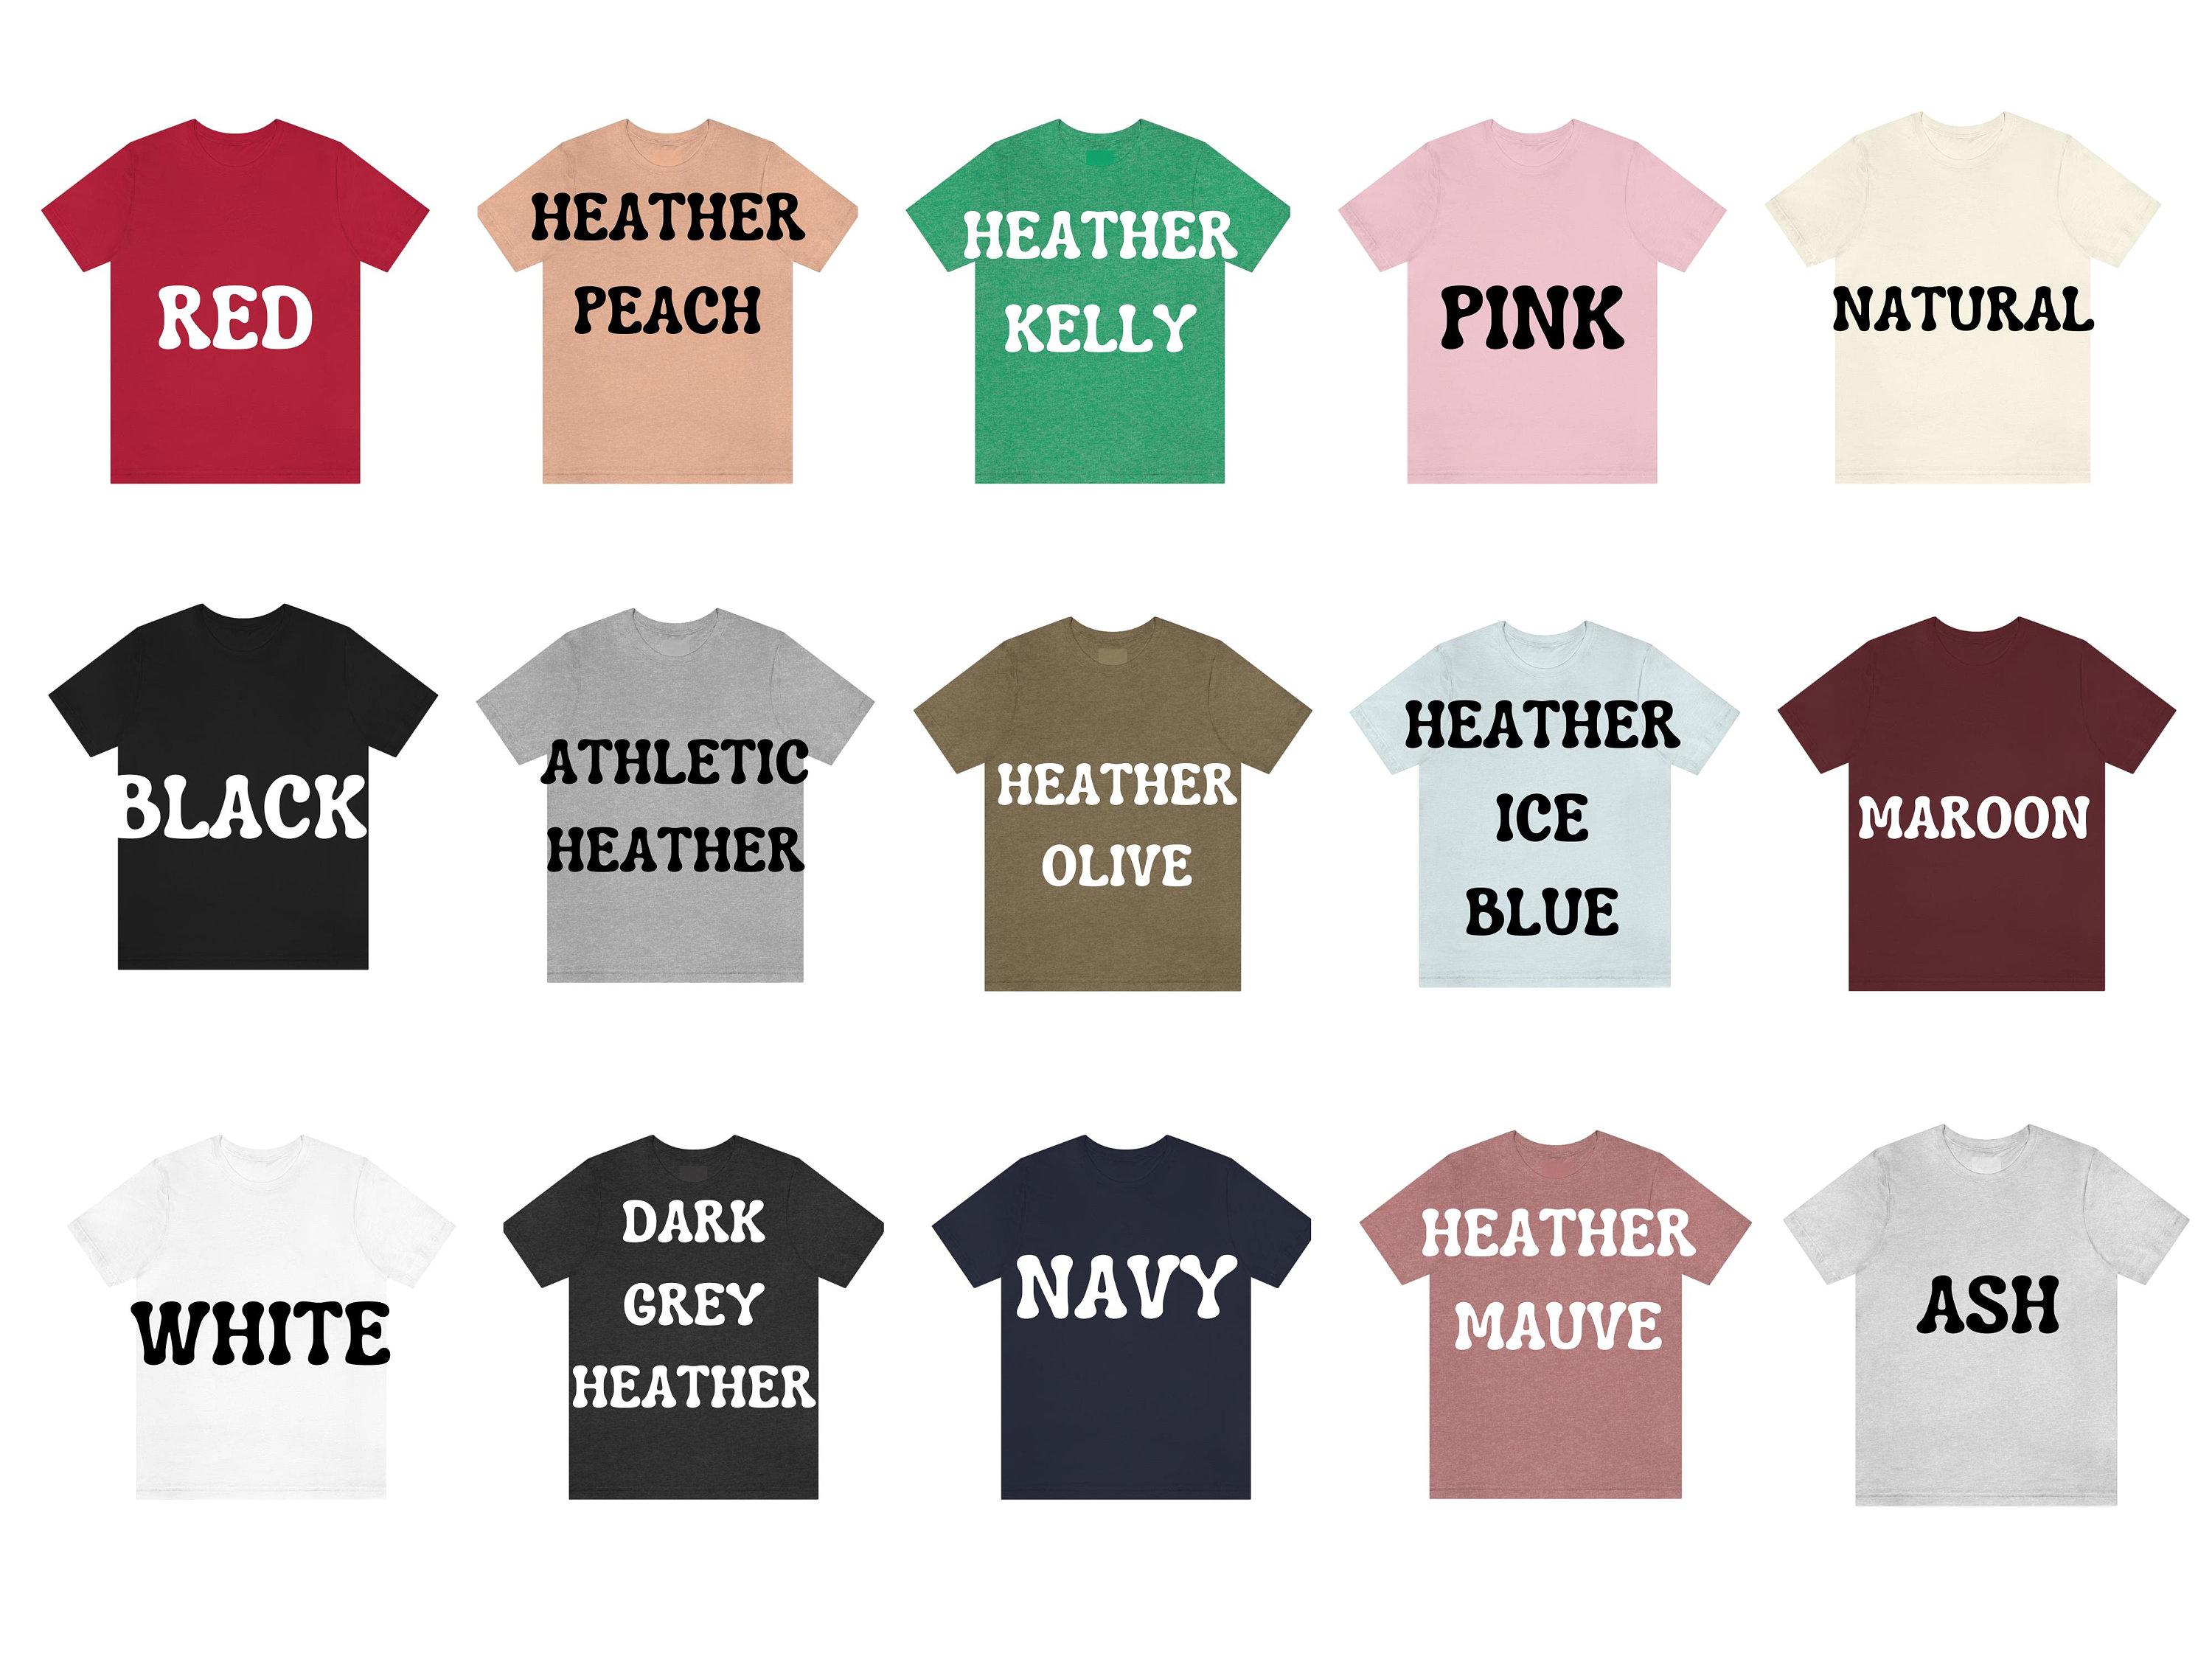 Eat Sleep Hockey Repeat Sport Tshirt / Hockey Player / Hockey Games Tonight  / Tshirt / Design / Ideas / Creative / Art / Funny / Hipster / Cool / Men /  Gift / GET IT NOW! Essential T-Shirt by flobra